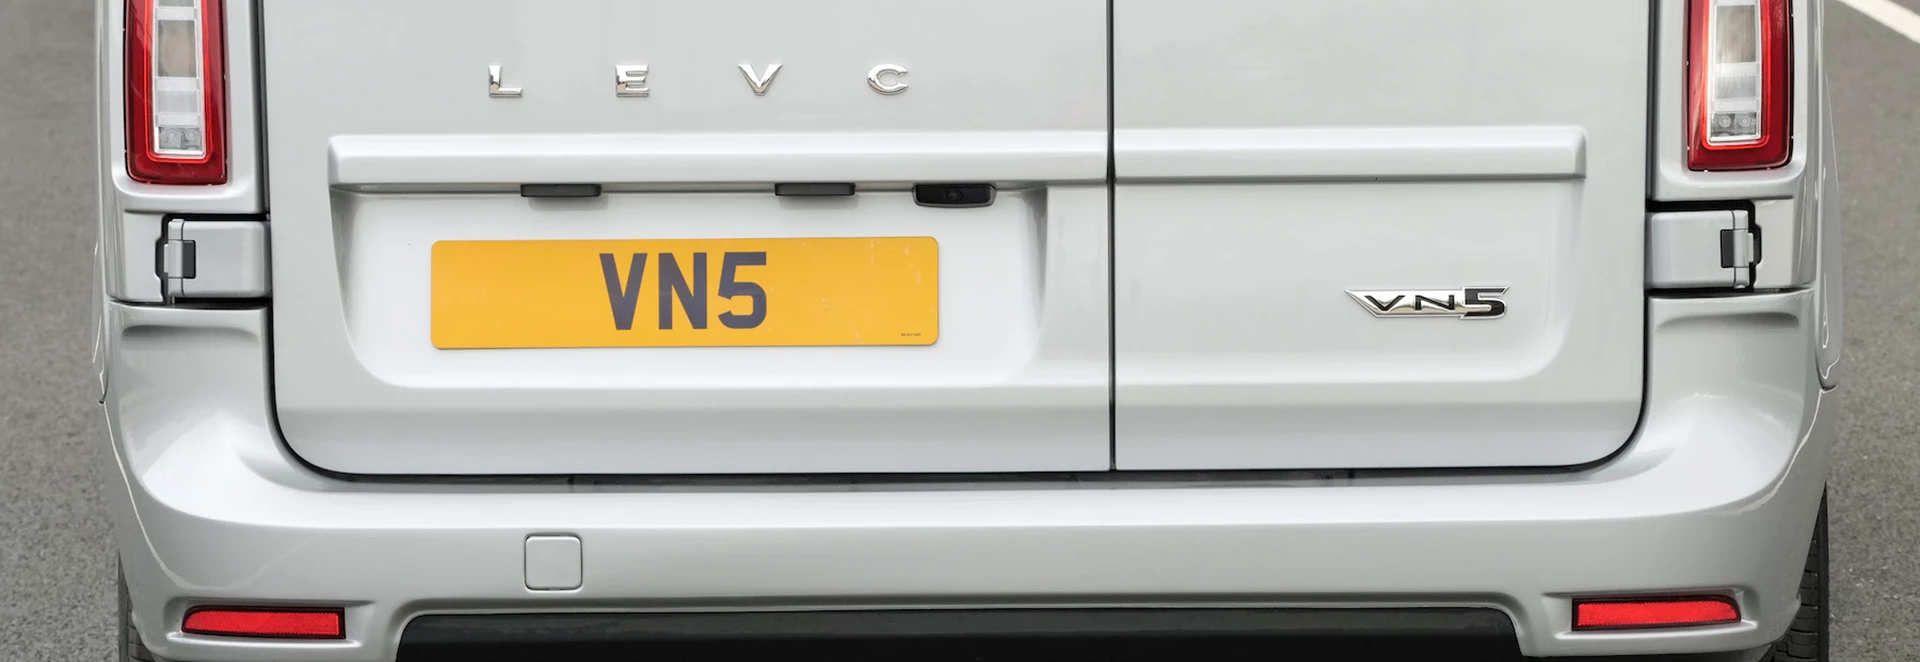 LEVC names its new electrified van